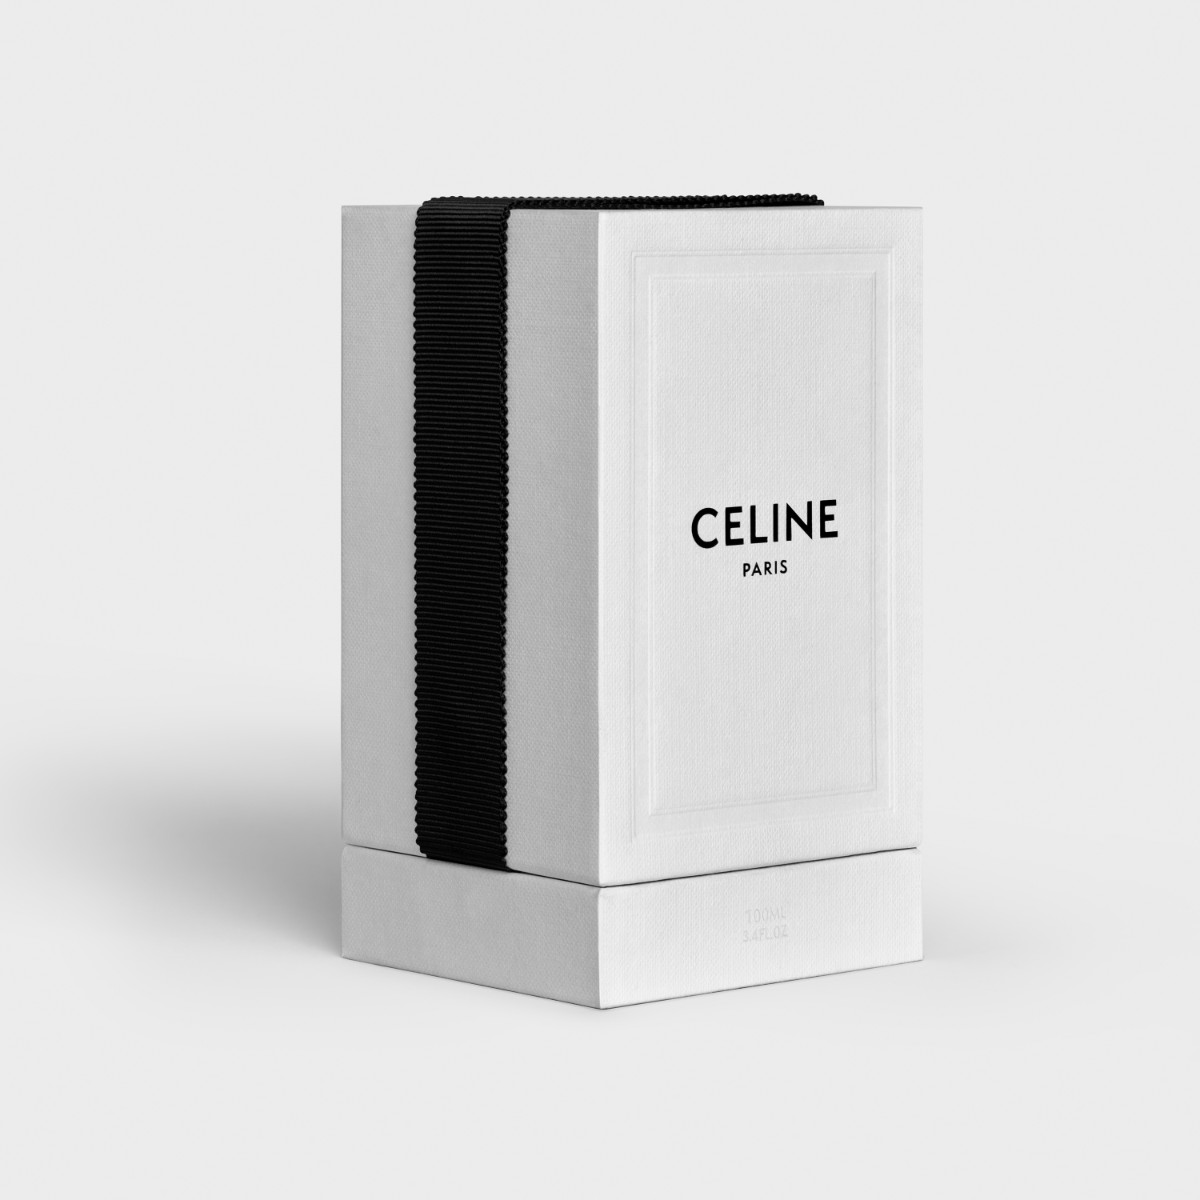 Celine’s New Opus From The Haute Parfumerie Collection: Bois Dormant